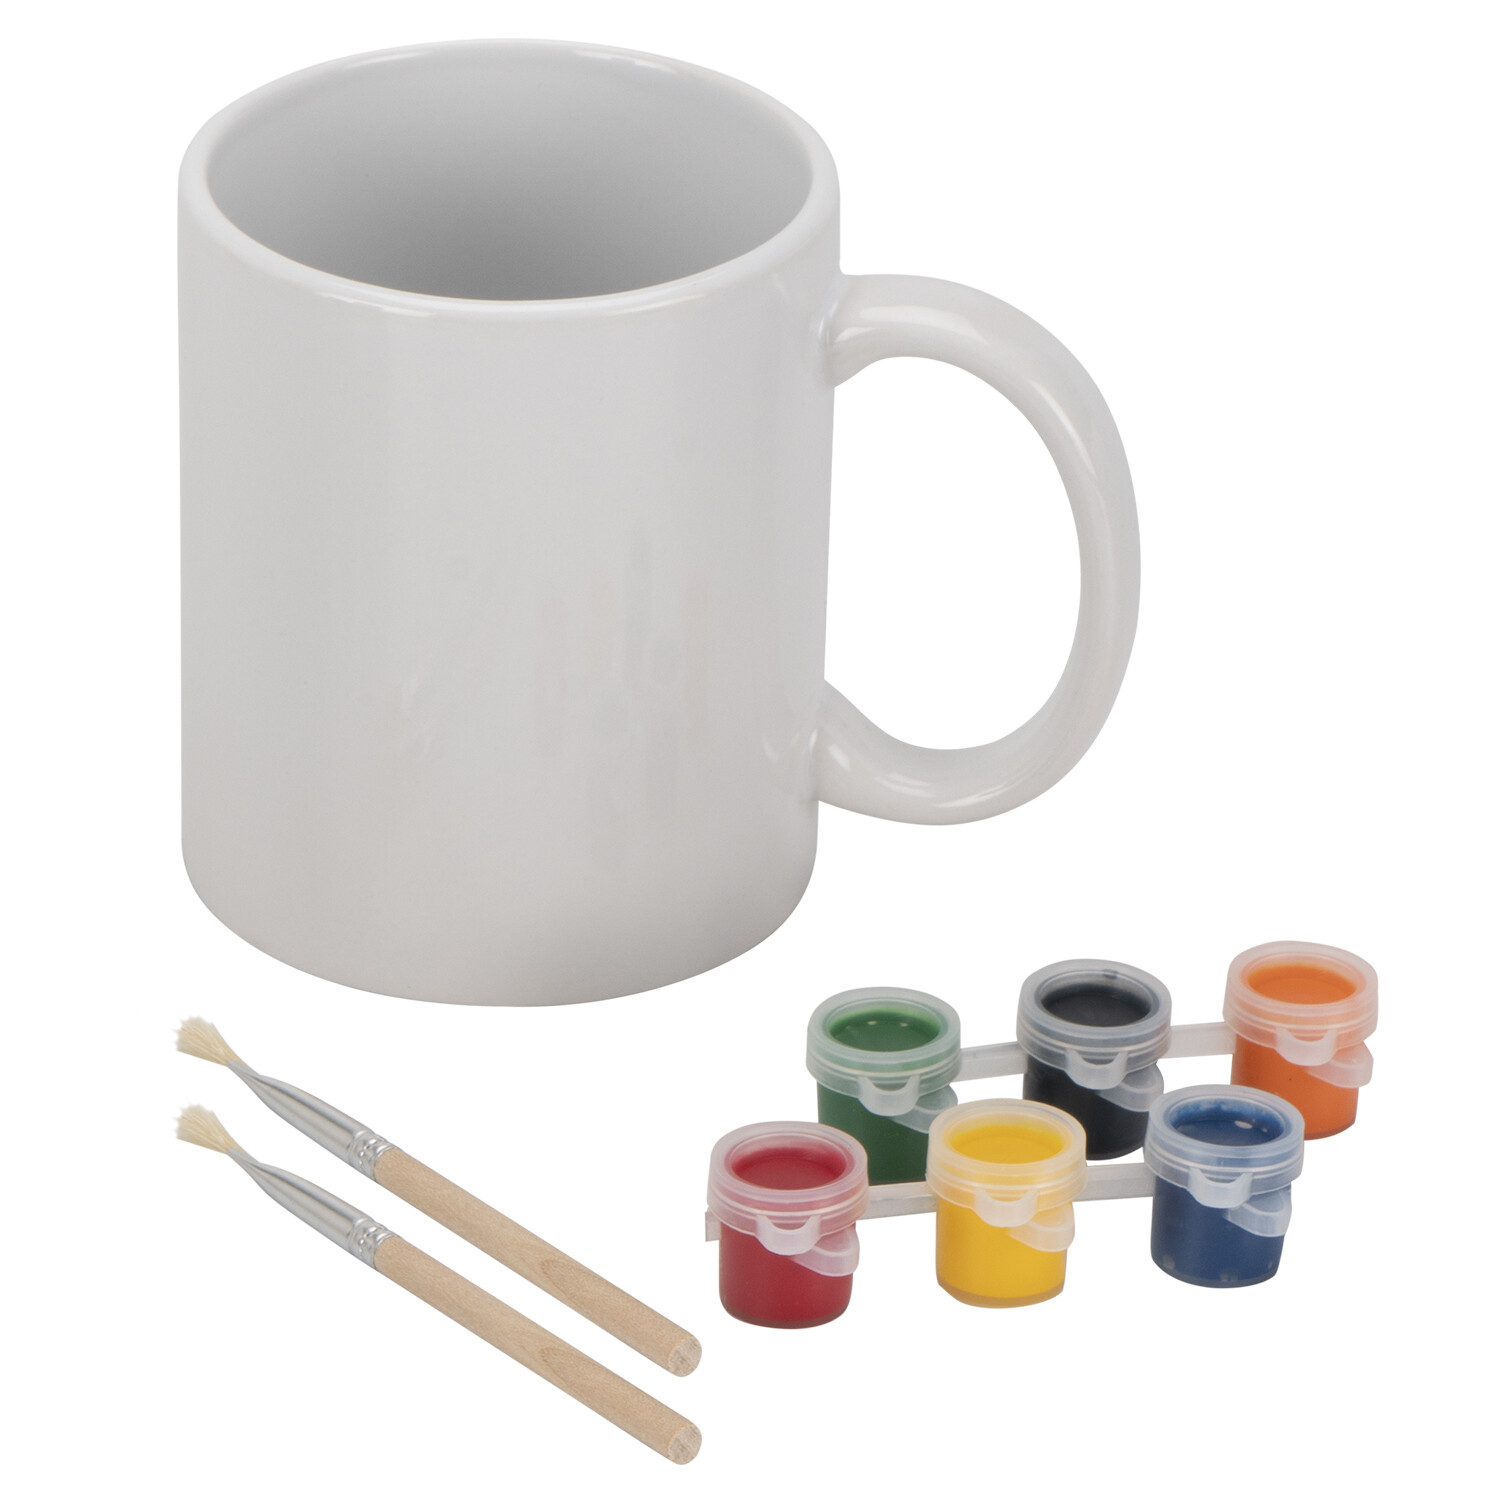 Bright Minds Create Your Own Mug Kit Image 2